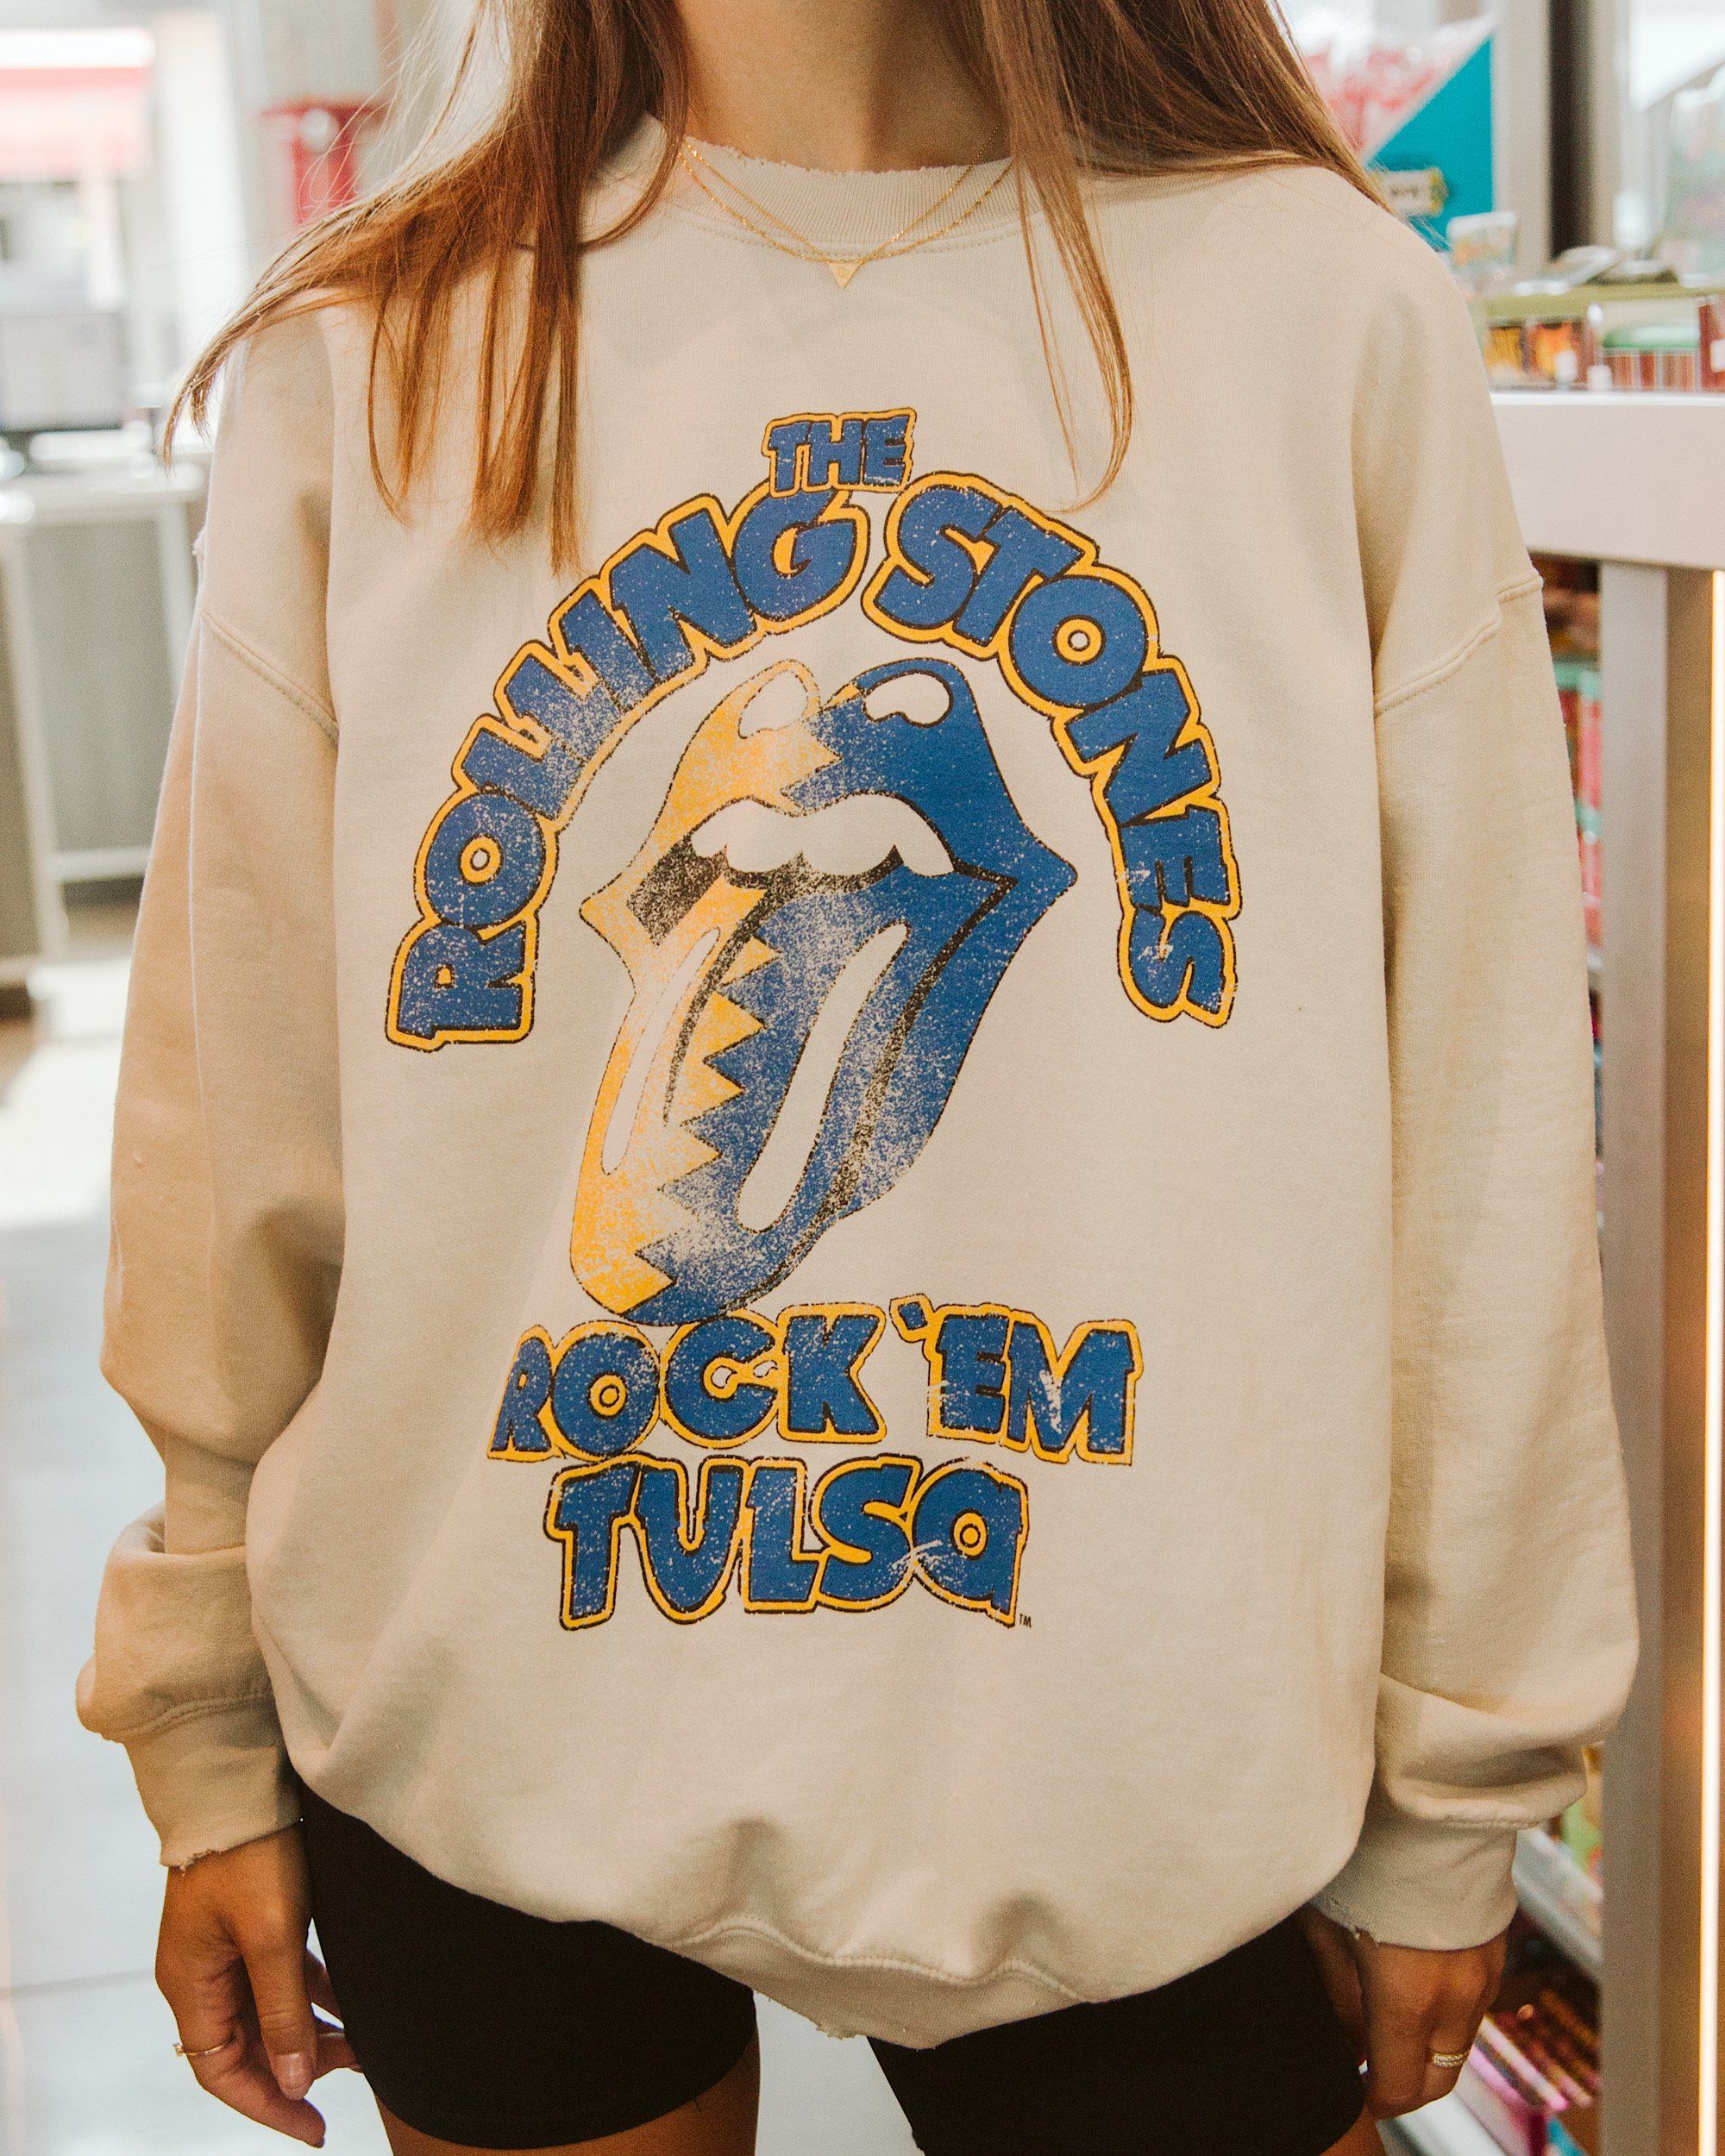 Rolling Stones Rock 'Em Tulsa Sand Thrifted Sweatshirt - shoplivylu